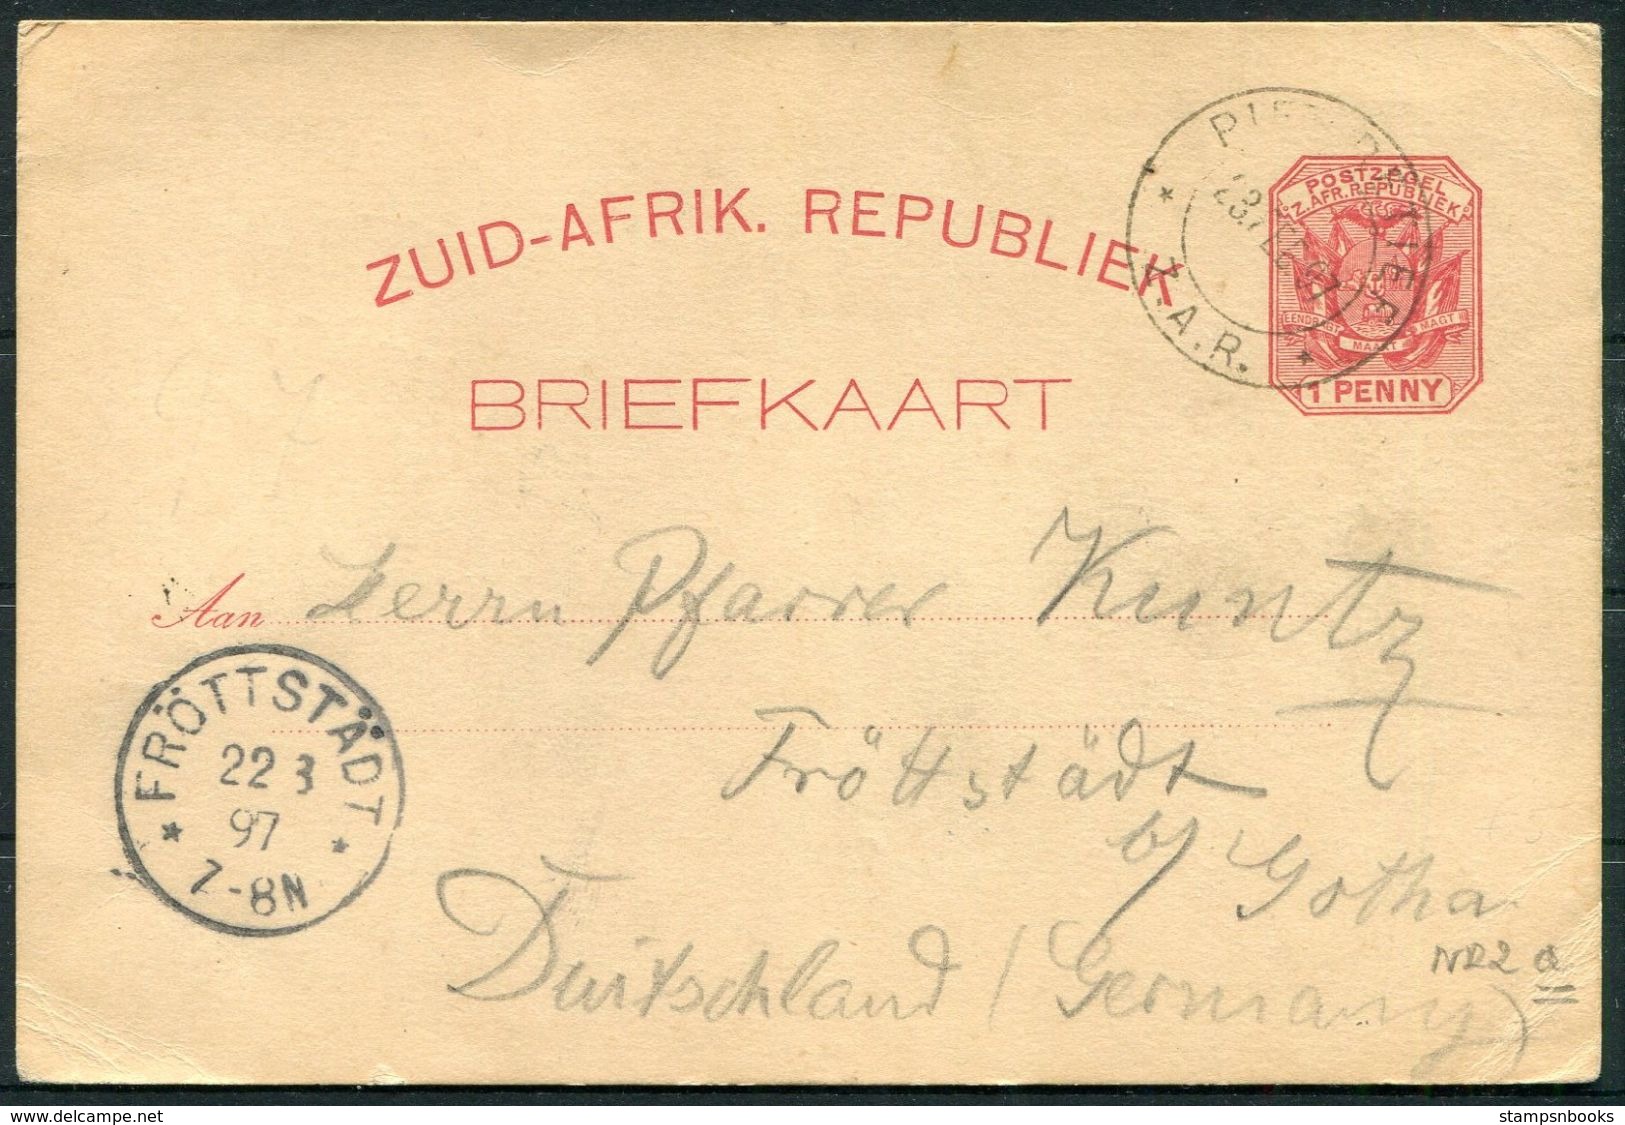 1897 South Africa Z.A.R. Stationery Postcard - Frottstadt Germany - Neue Republik (1886-1887)